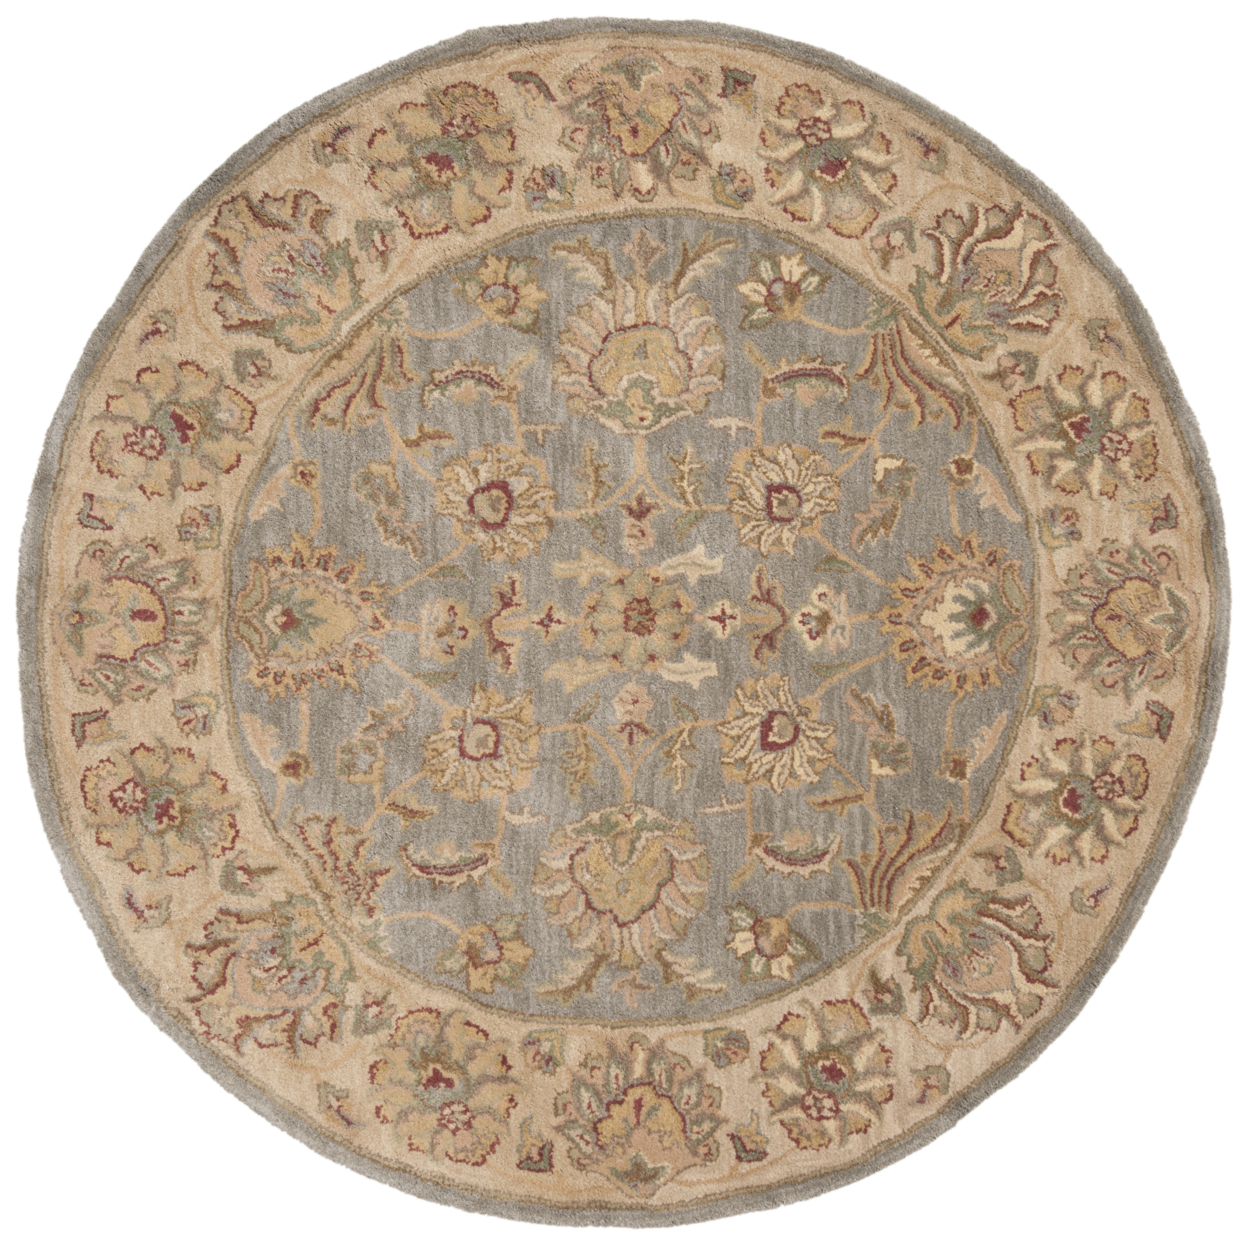 SAFAVIEH Heritage Regis Traditional Wool Area Rug, Blue/Beige, 3'6" x 3'6" Round - image 1 of 4